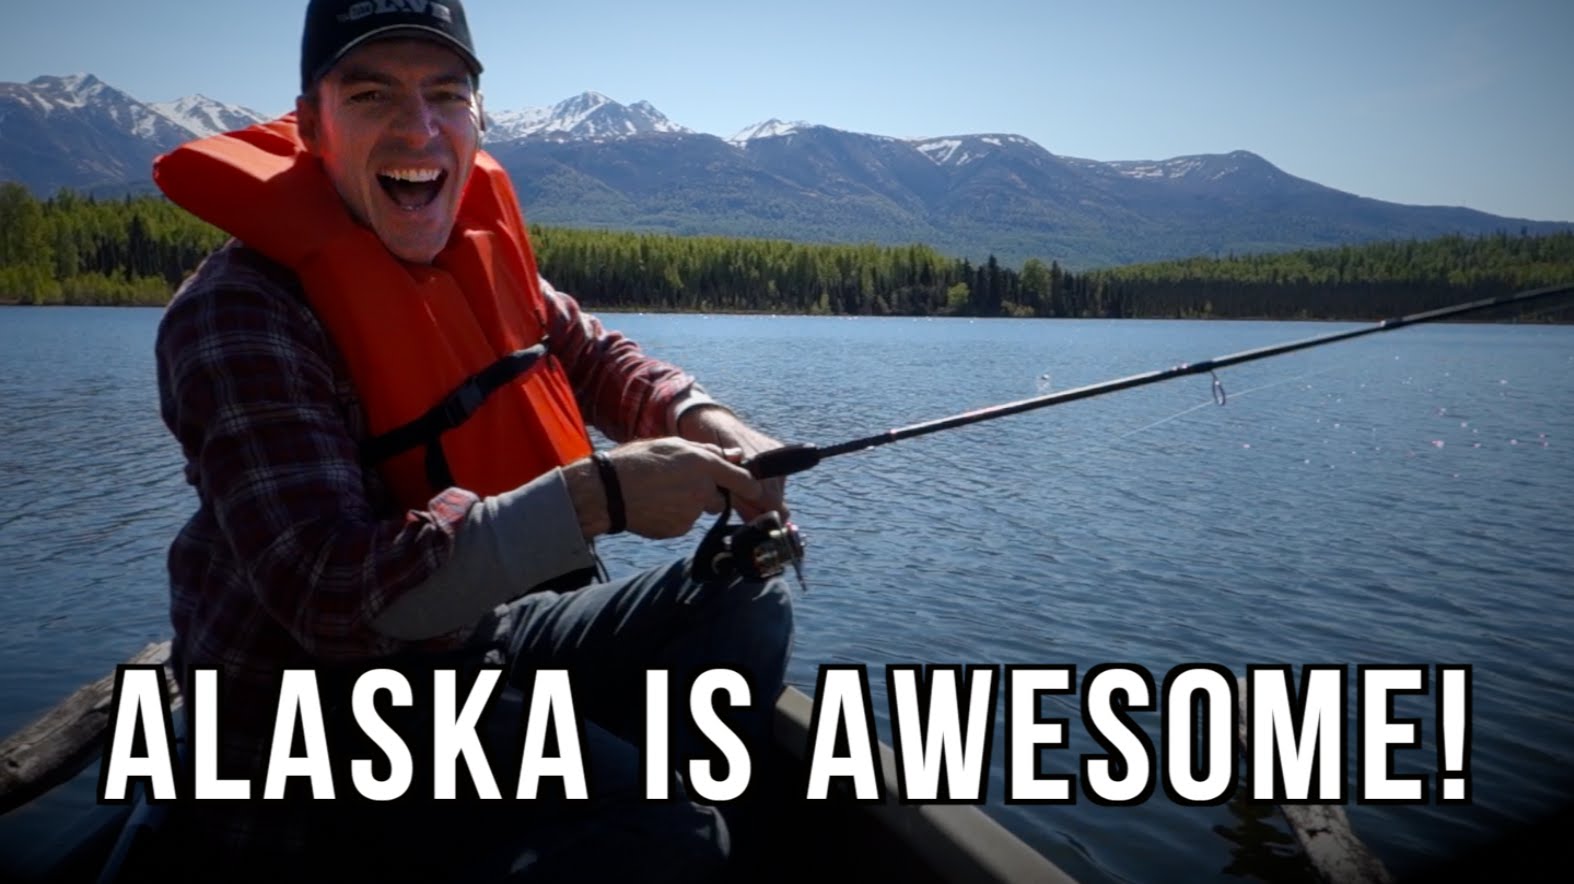 Meanwhile, In Alaska...